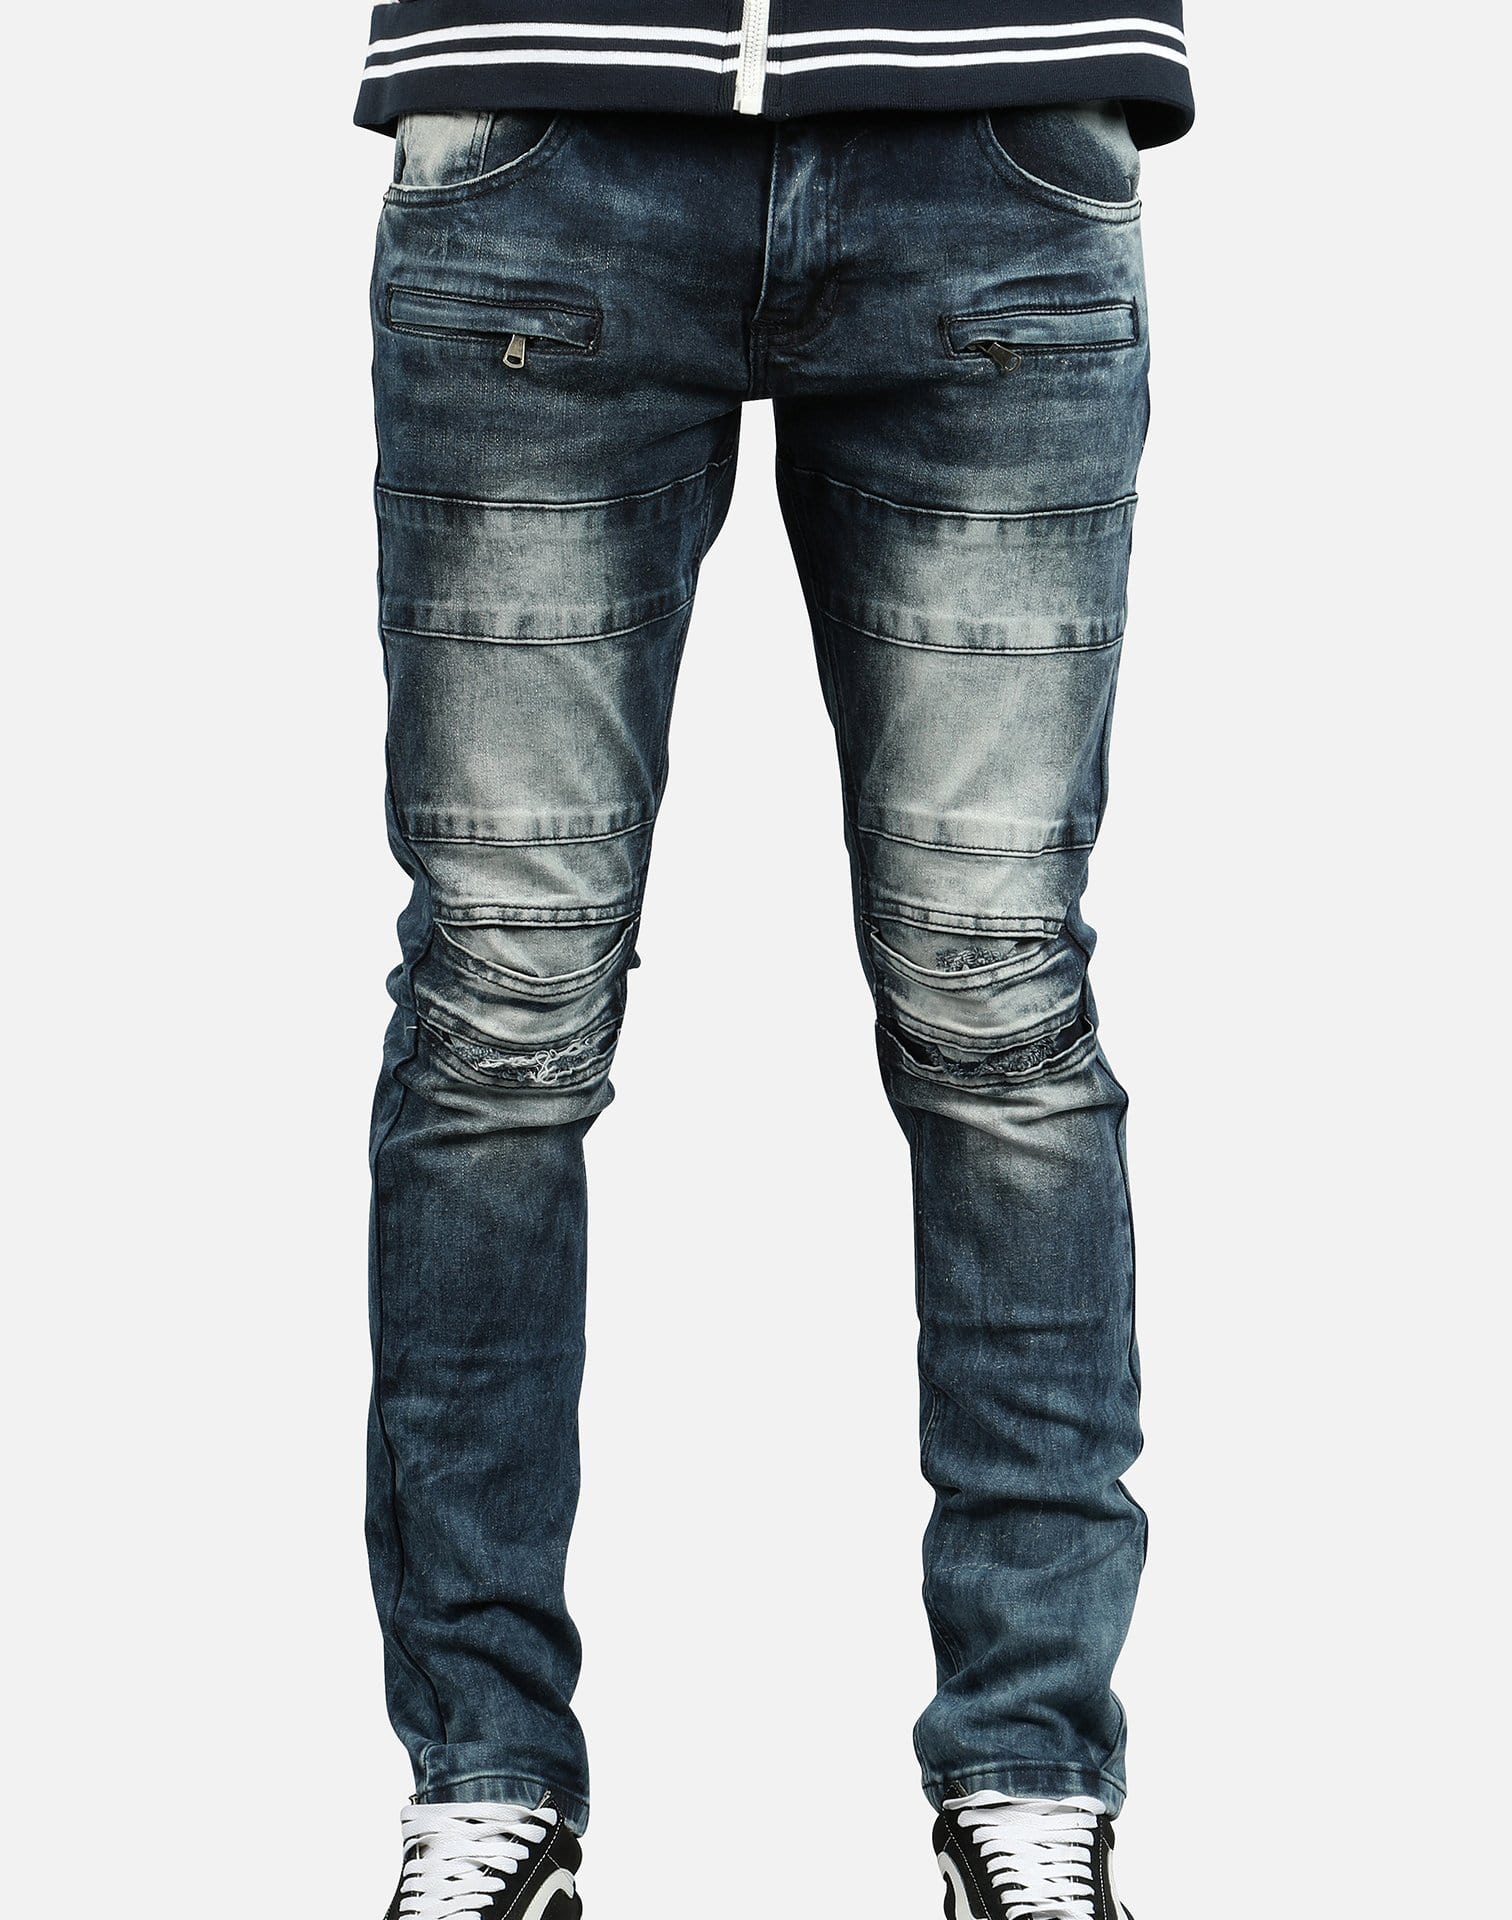 Kilogram Inc. Line Tint Jeans